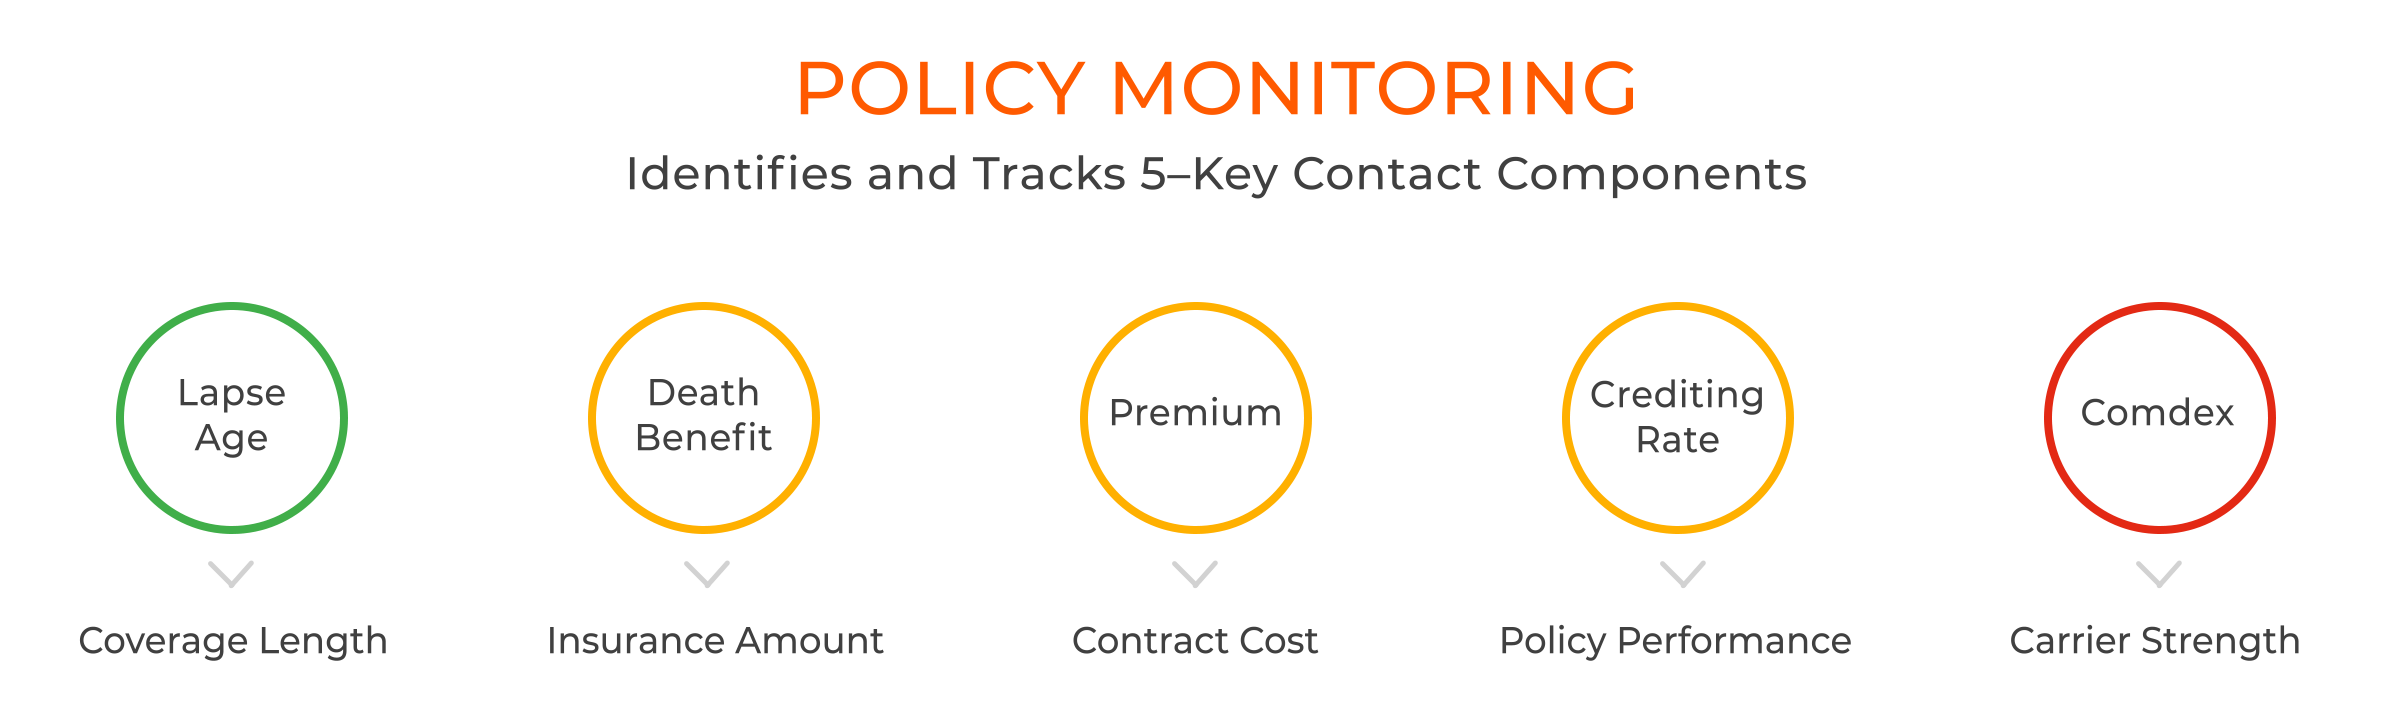 PX_Policy_Monitoring_v3